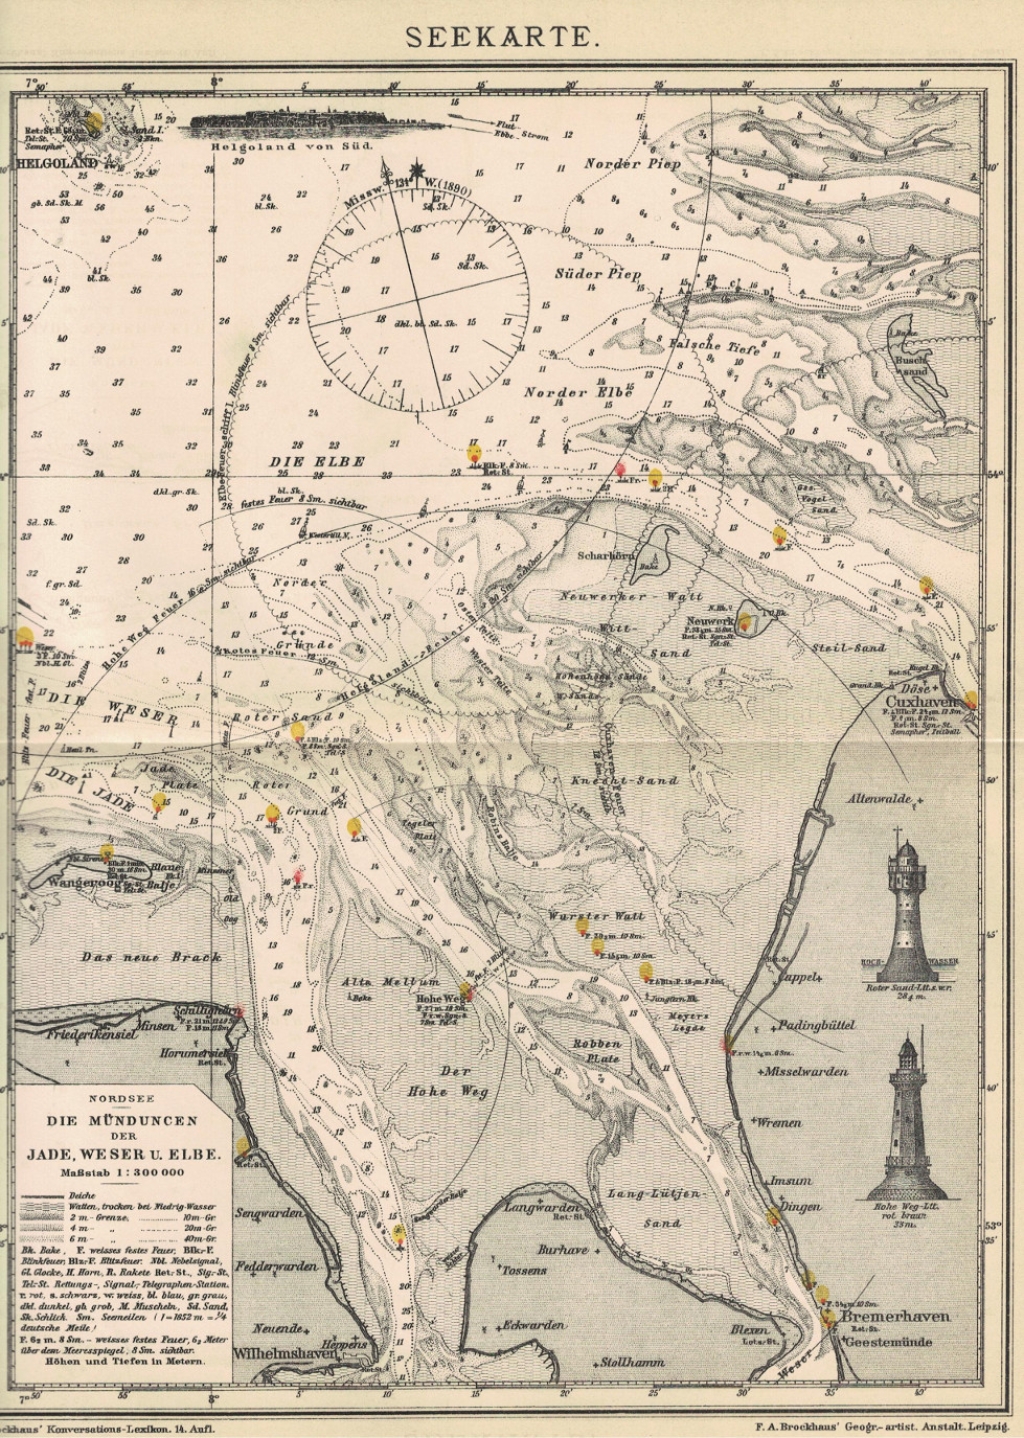 [rycina, 1895] Seekarte. Nordsee [mapa morska, Morze Północne]